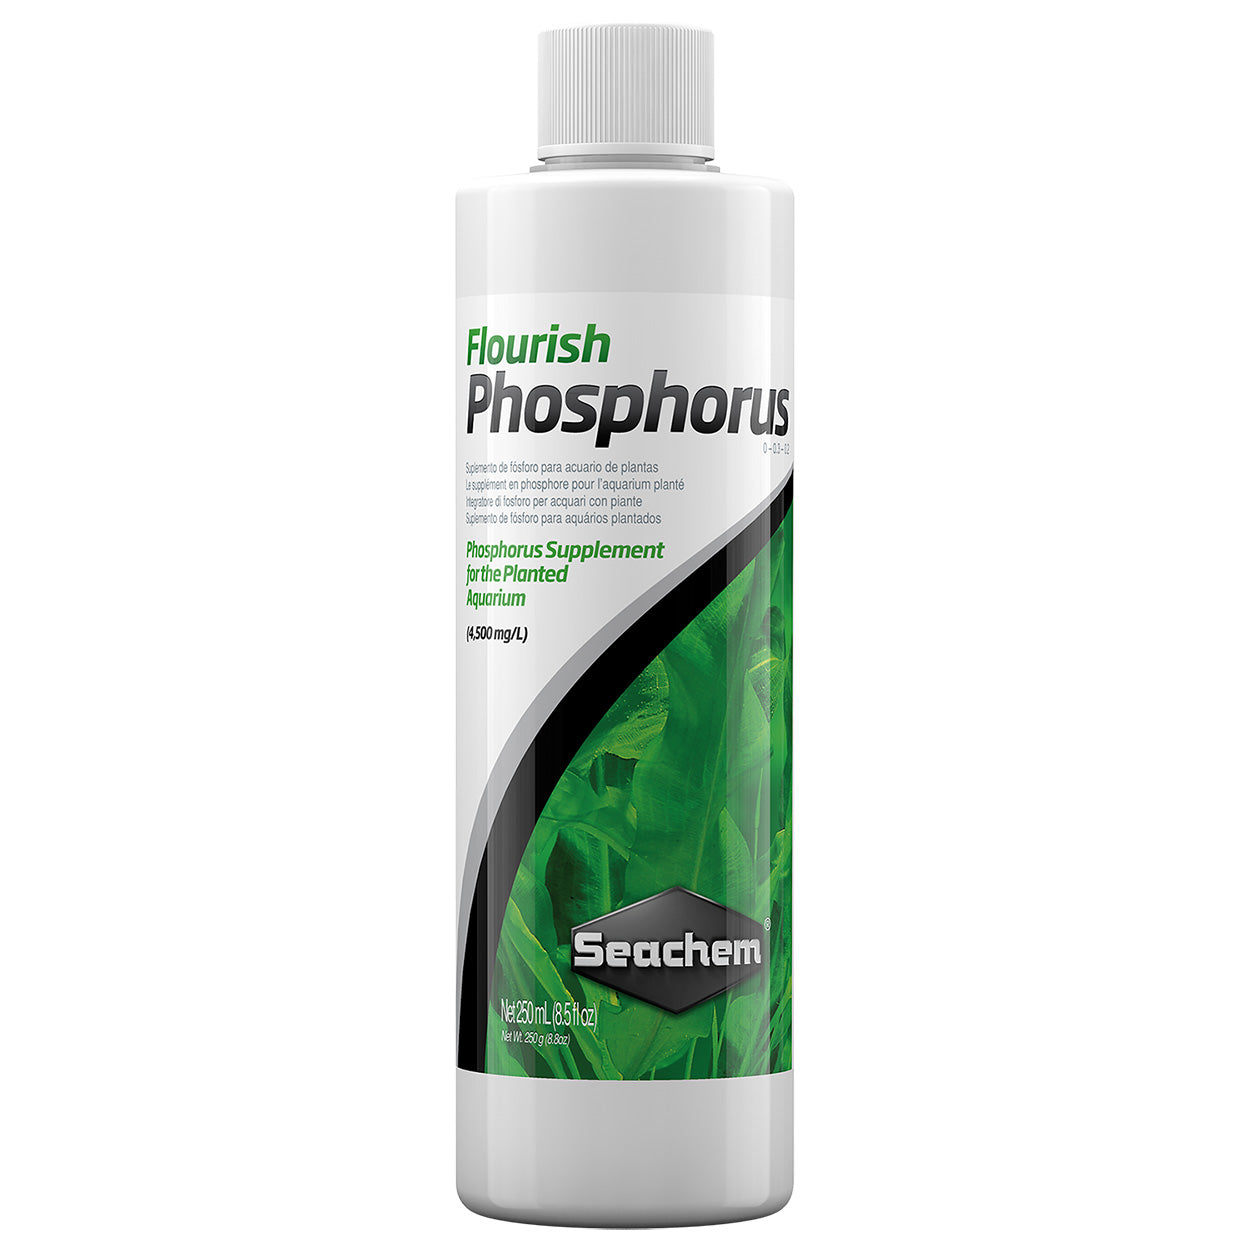 Flourish Phosphorus